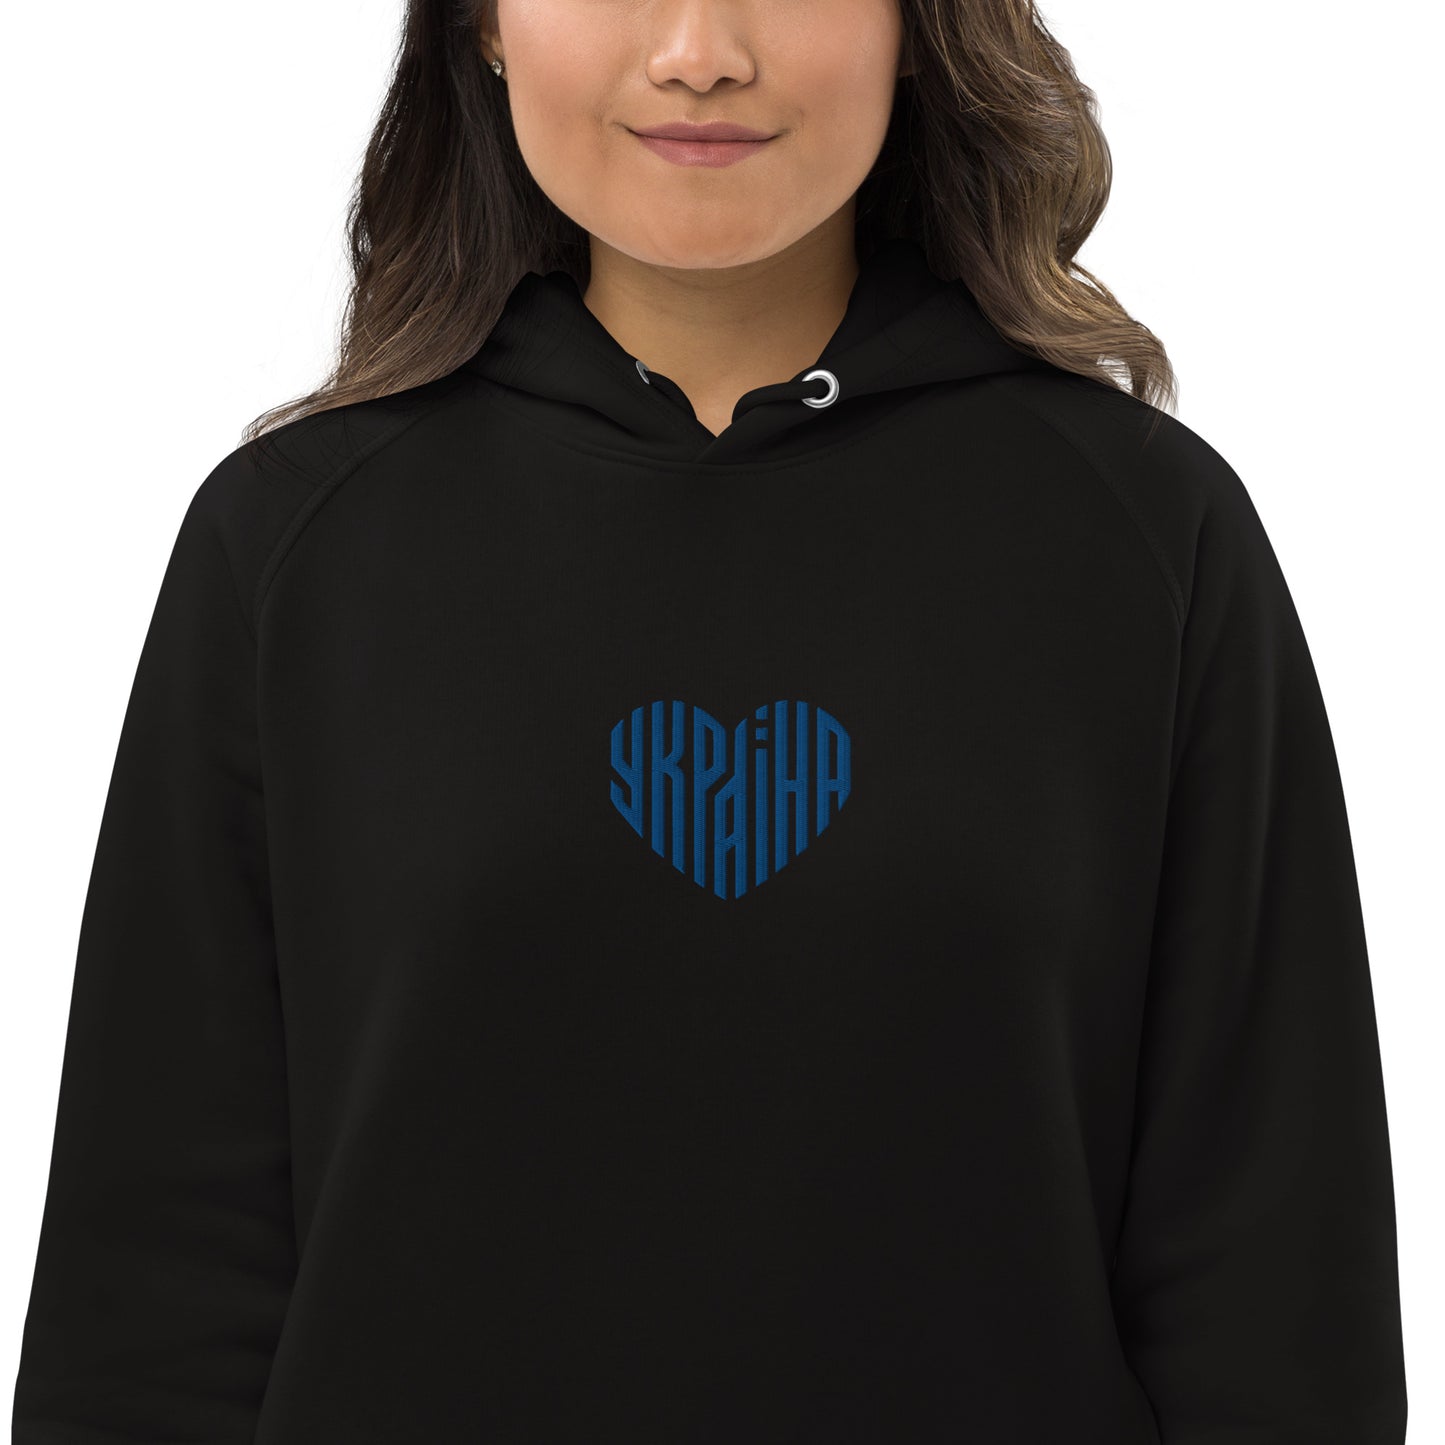 Heart Ukraine embroidered unisex pullover hoodie in black